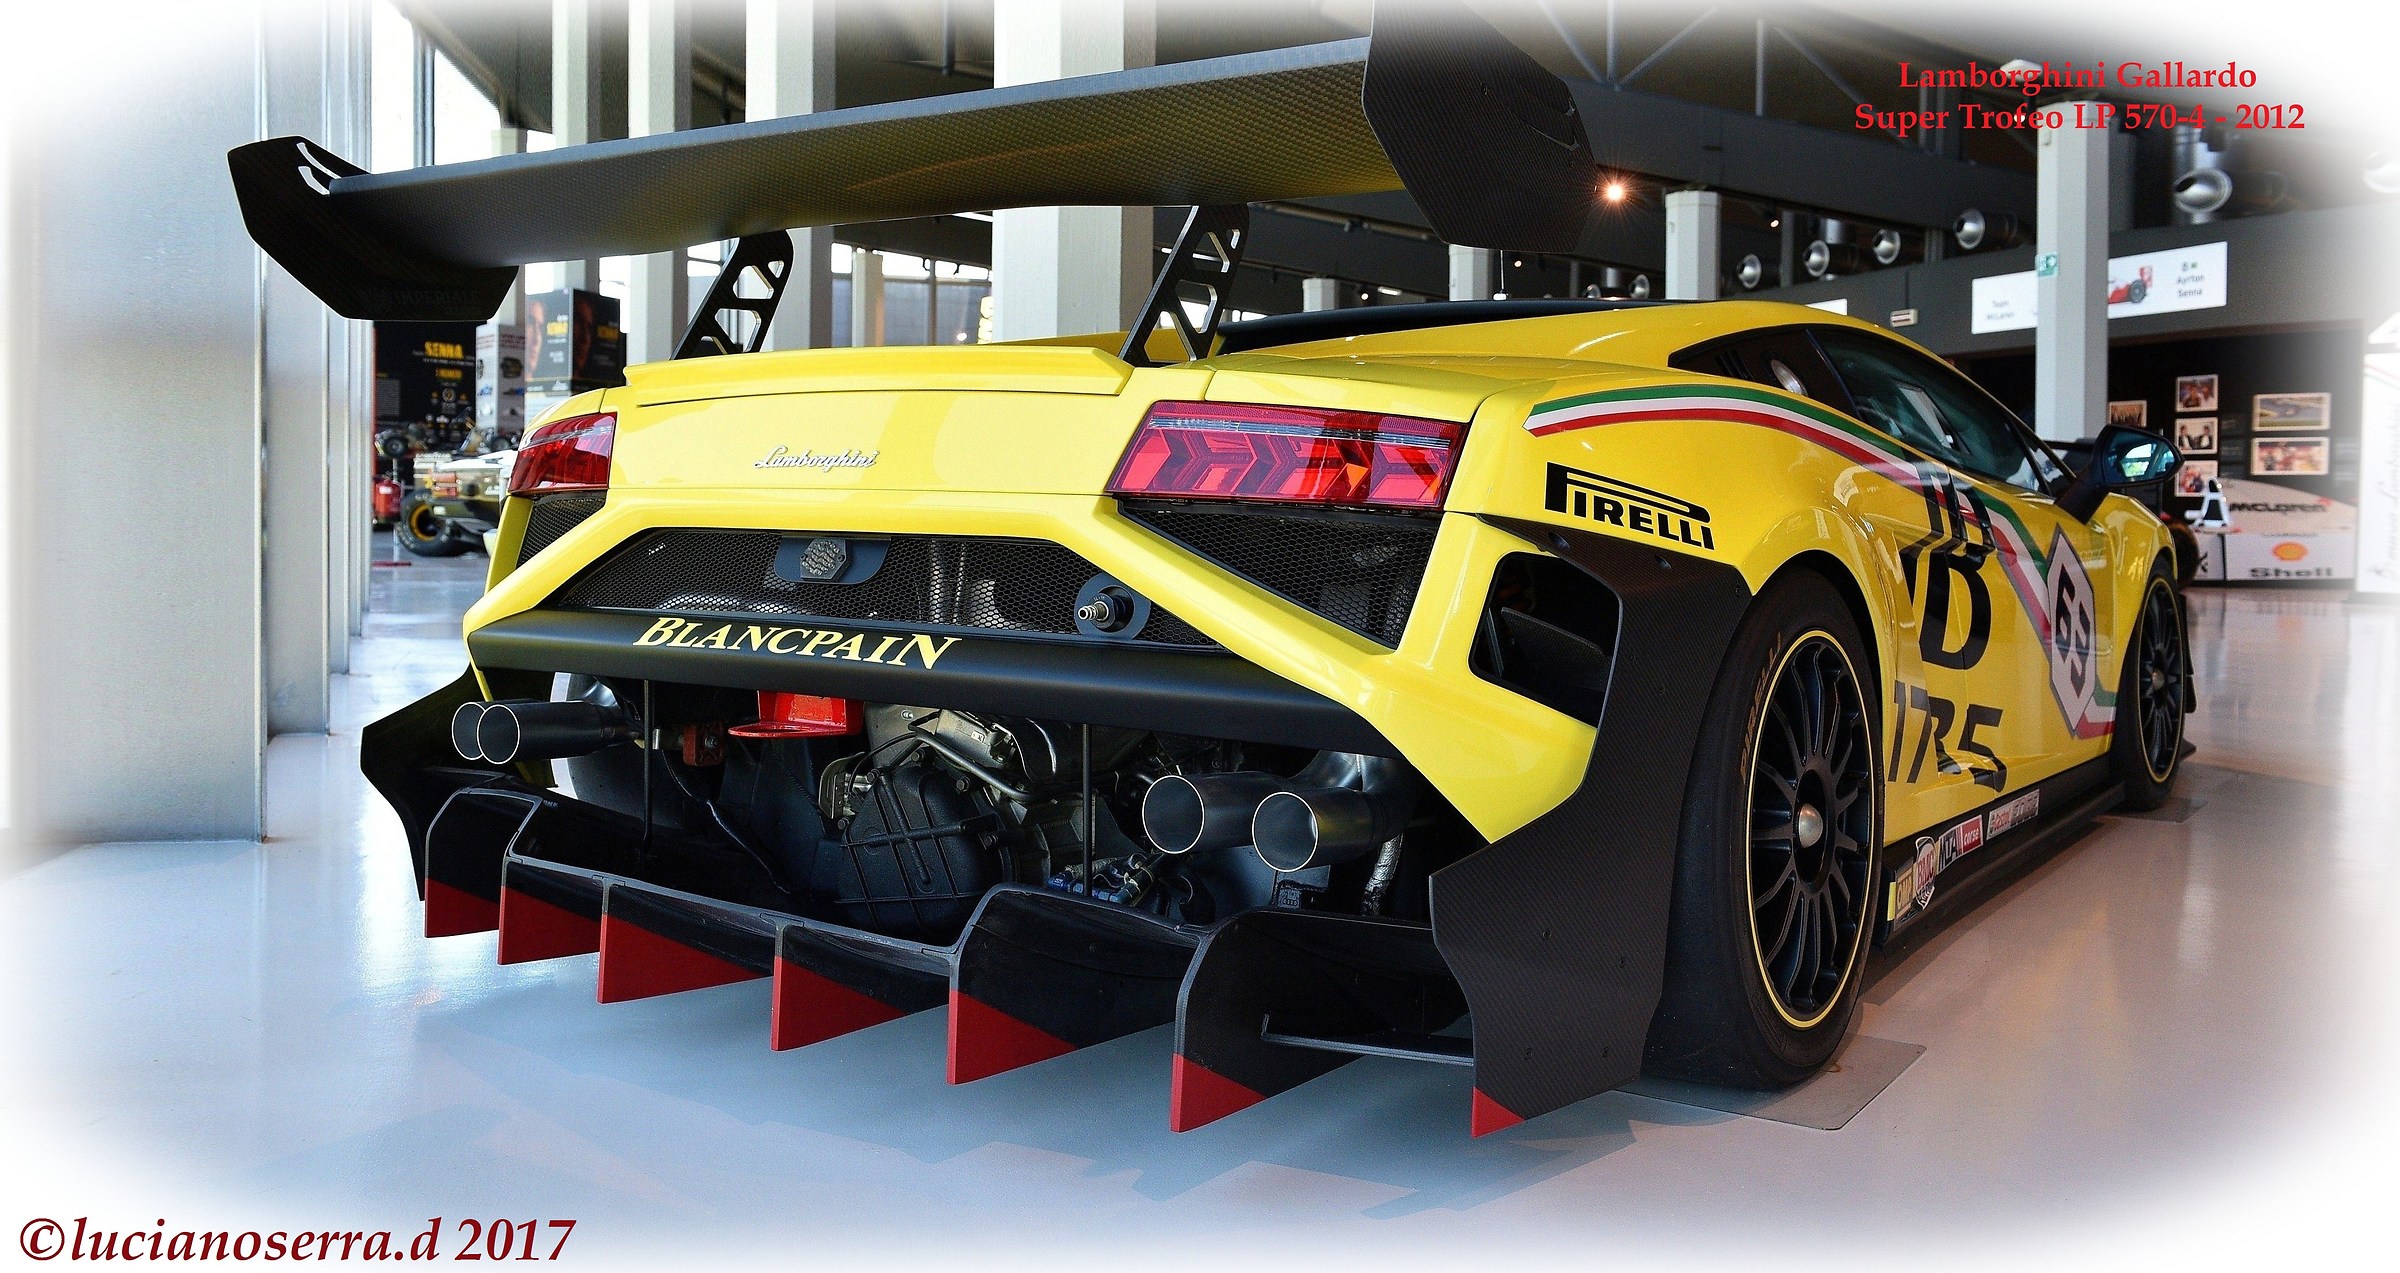 Lamborghini Gallardo Super Trofeo LP 570-4 - 2012...